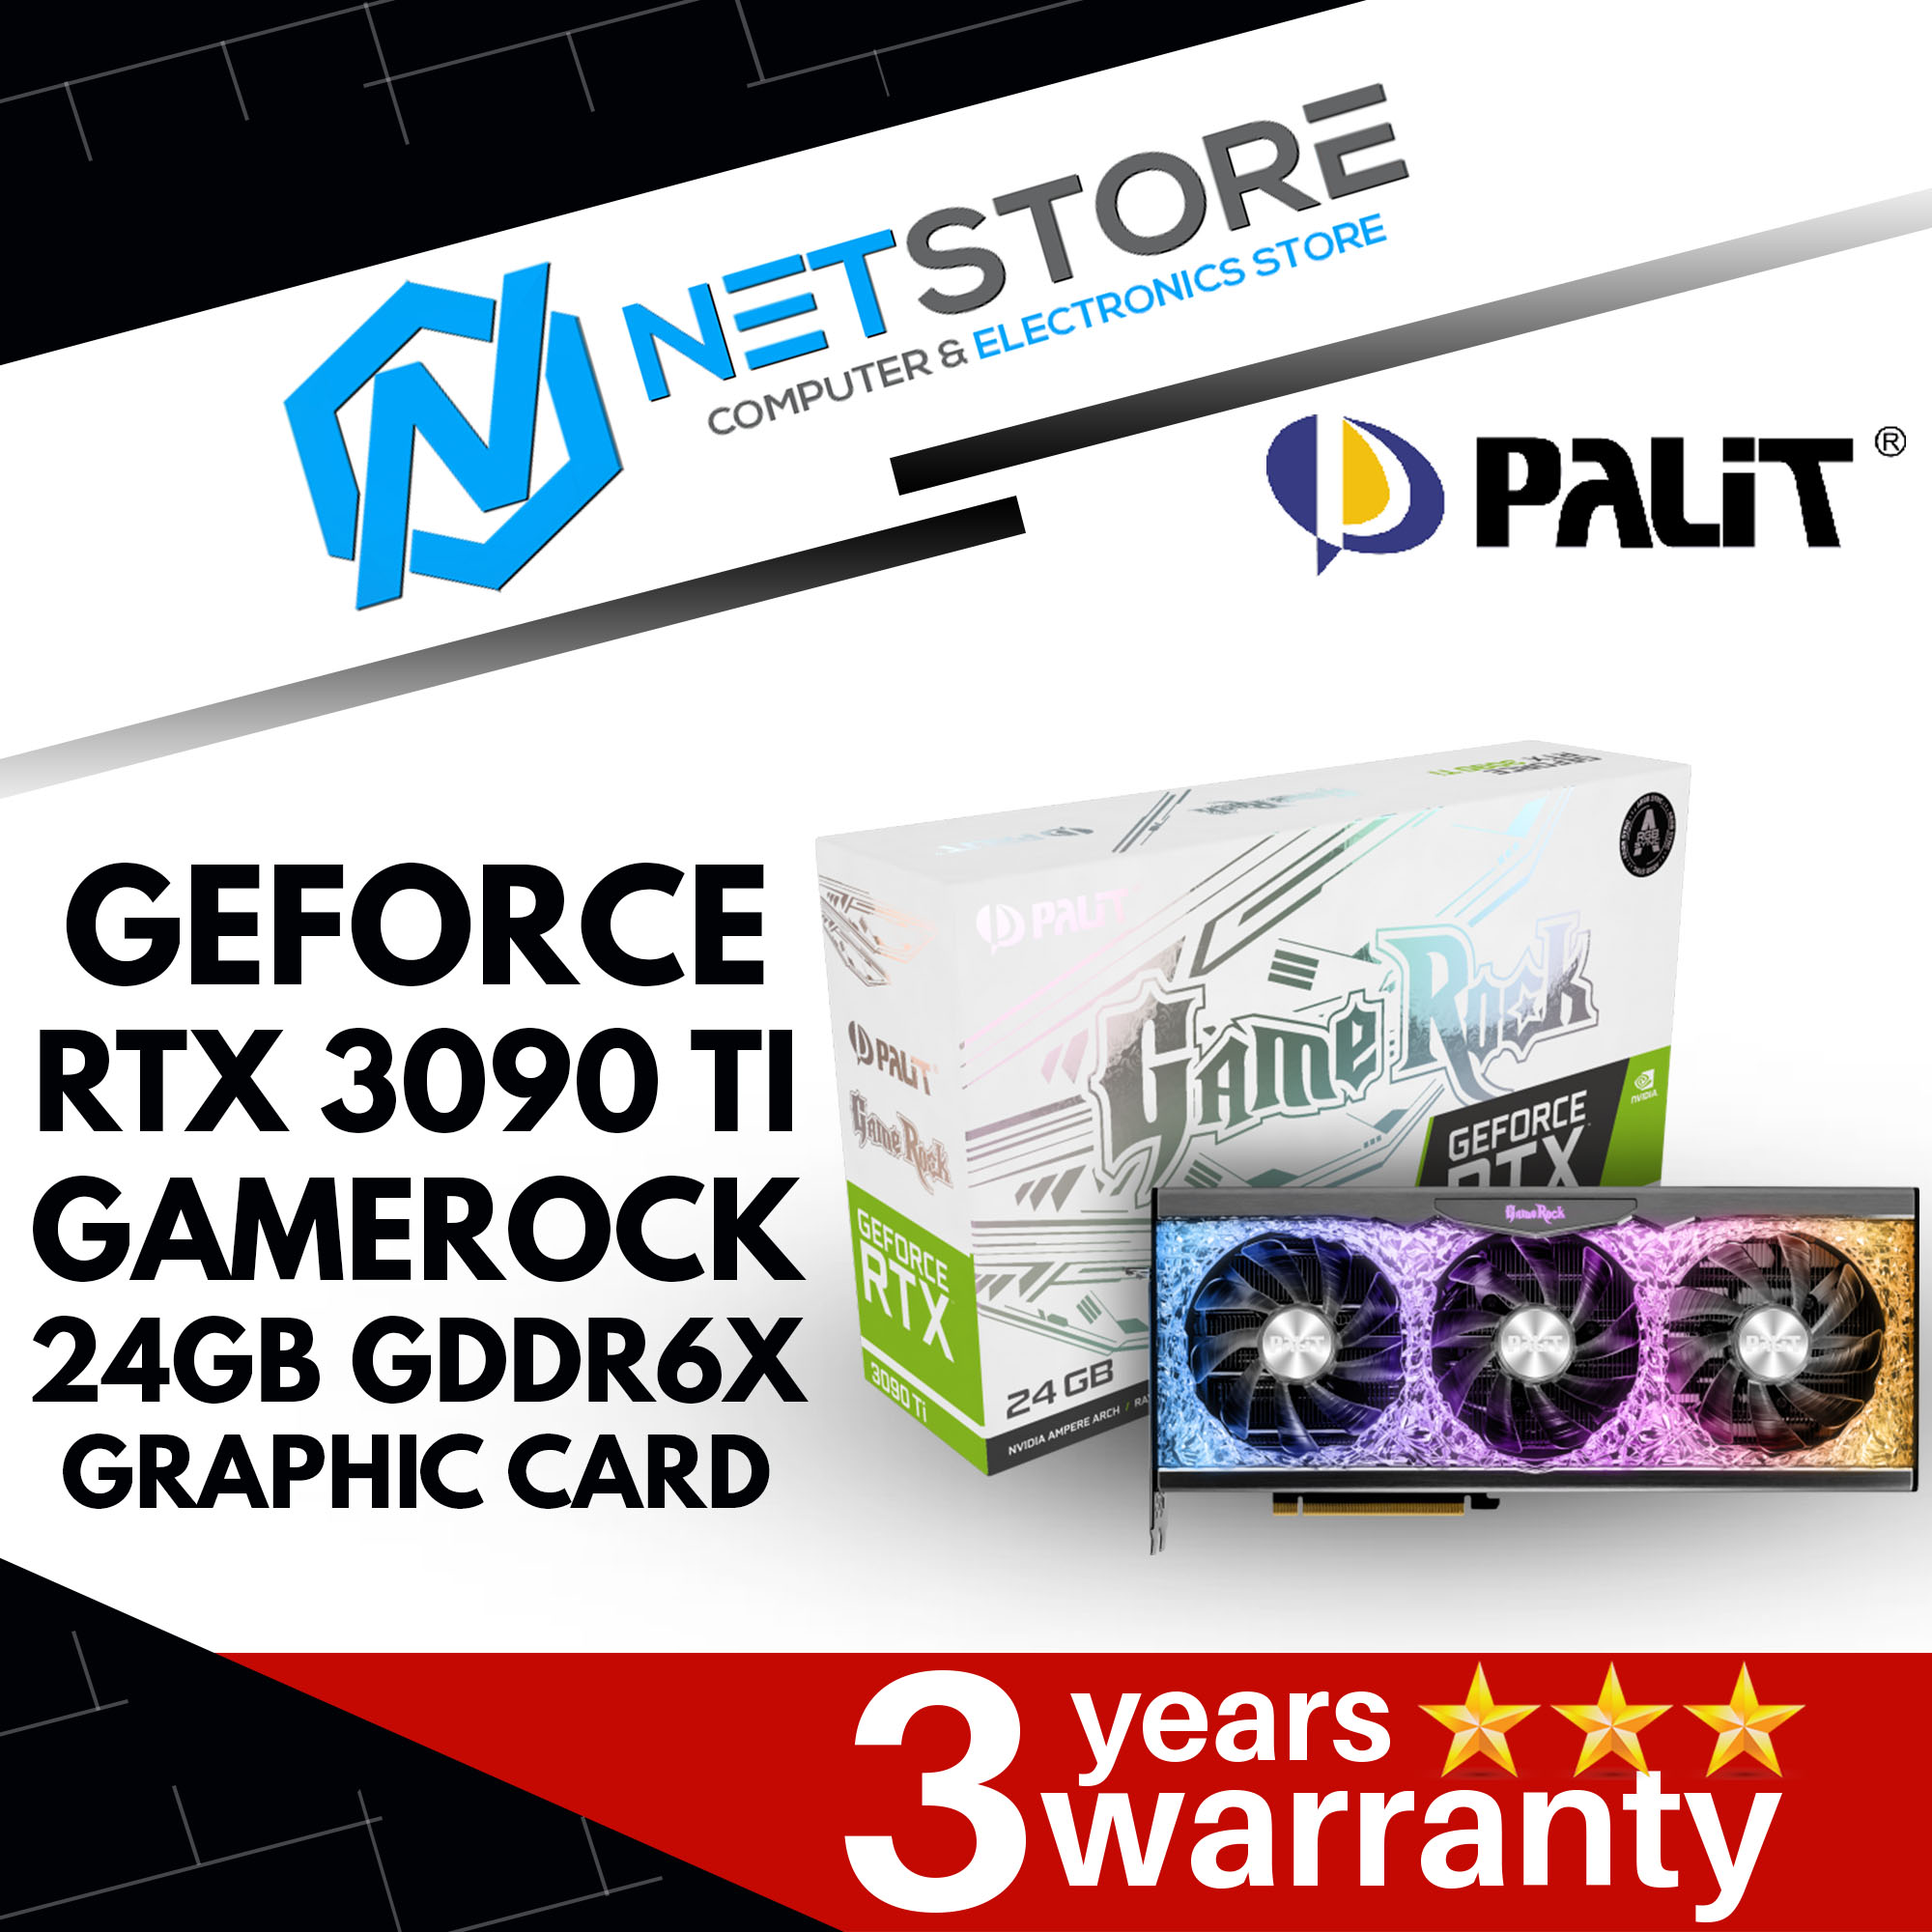 PALIT GEFORCE RTX 3090 TI GAMEROCK 24GB GDDR6X GRAPHIC CARD